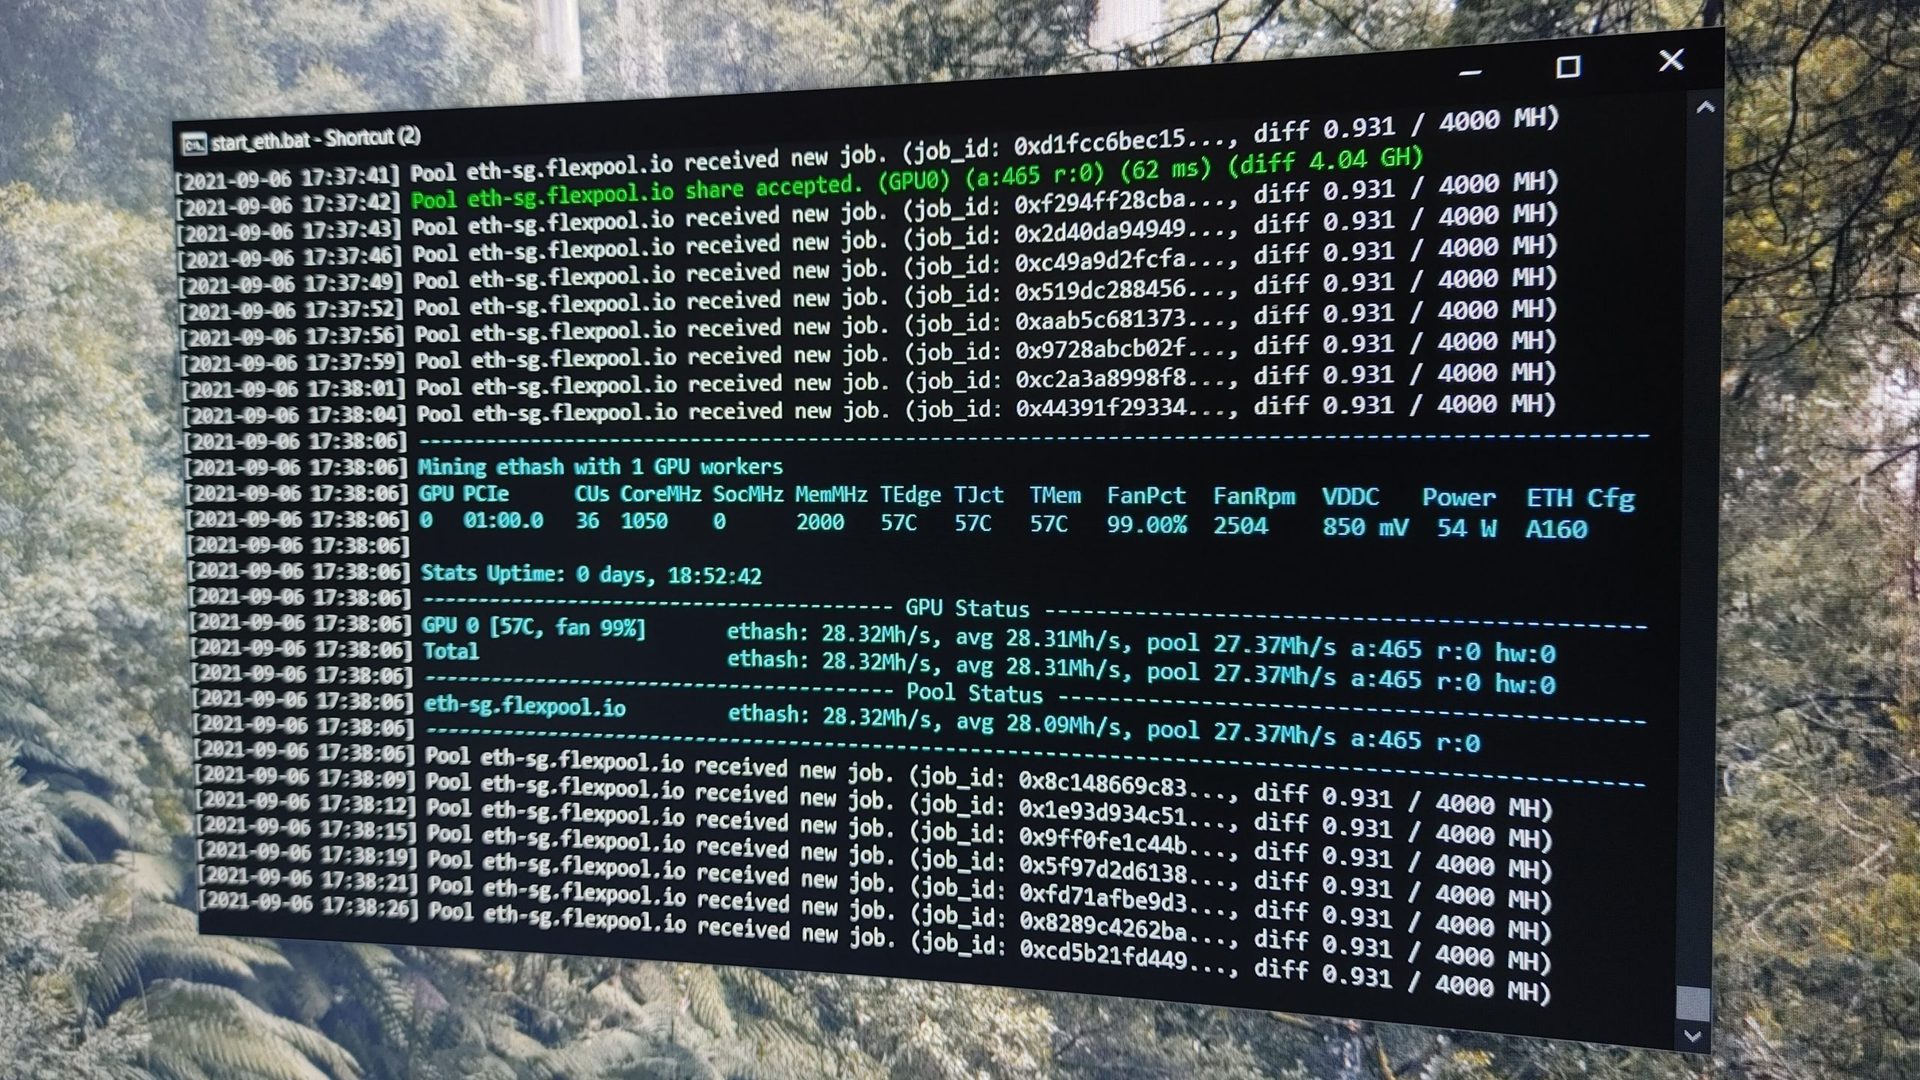 Terminal window showing Ethereum mining stats